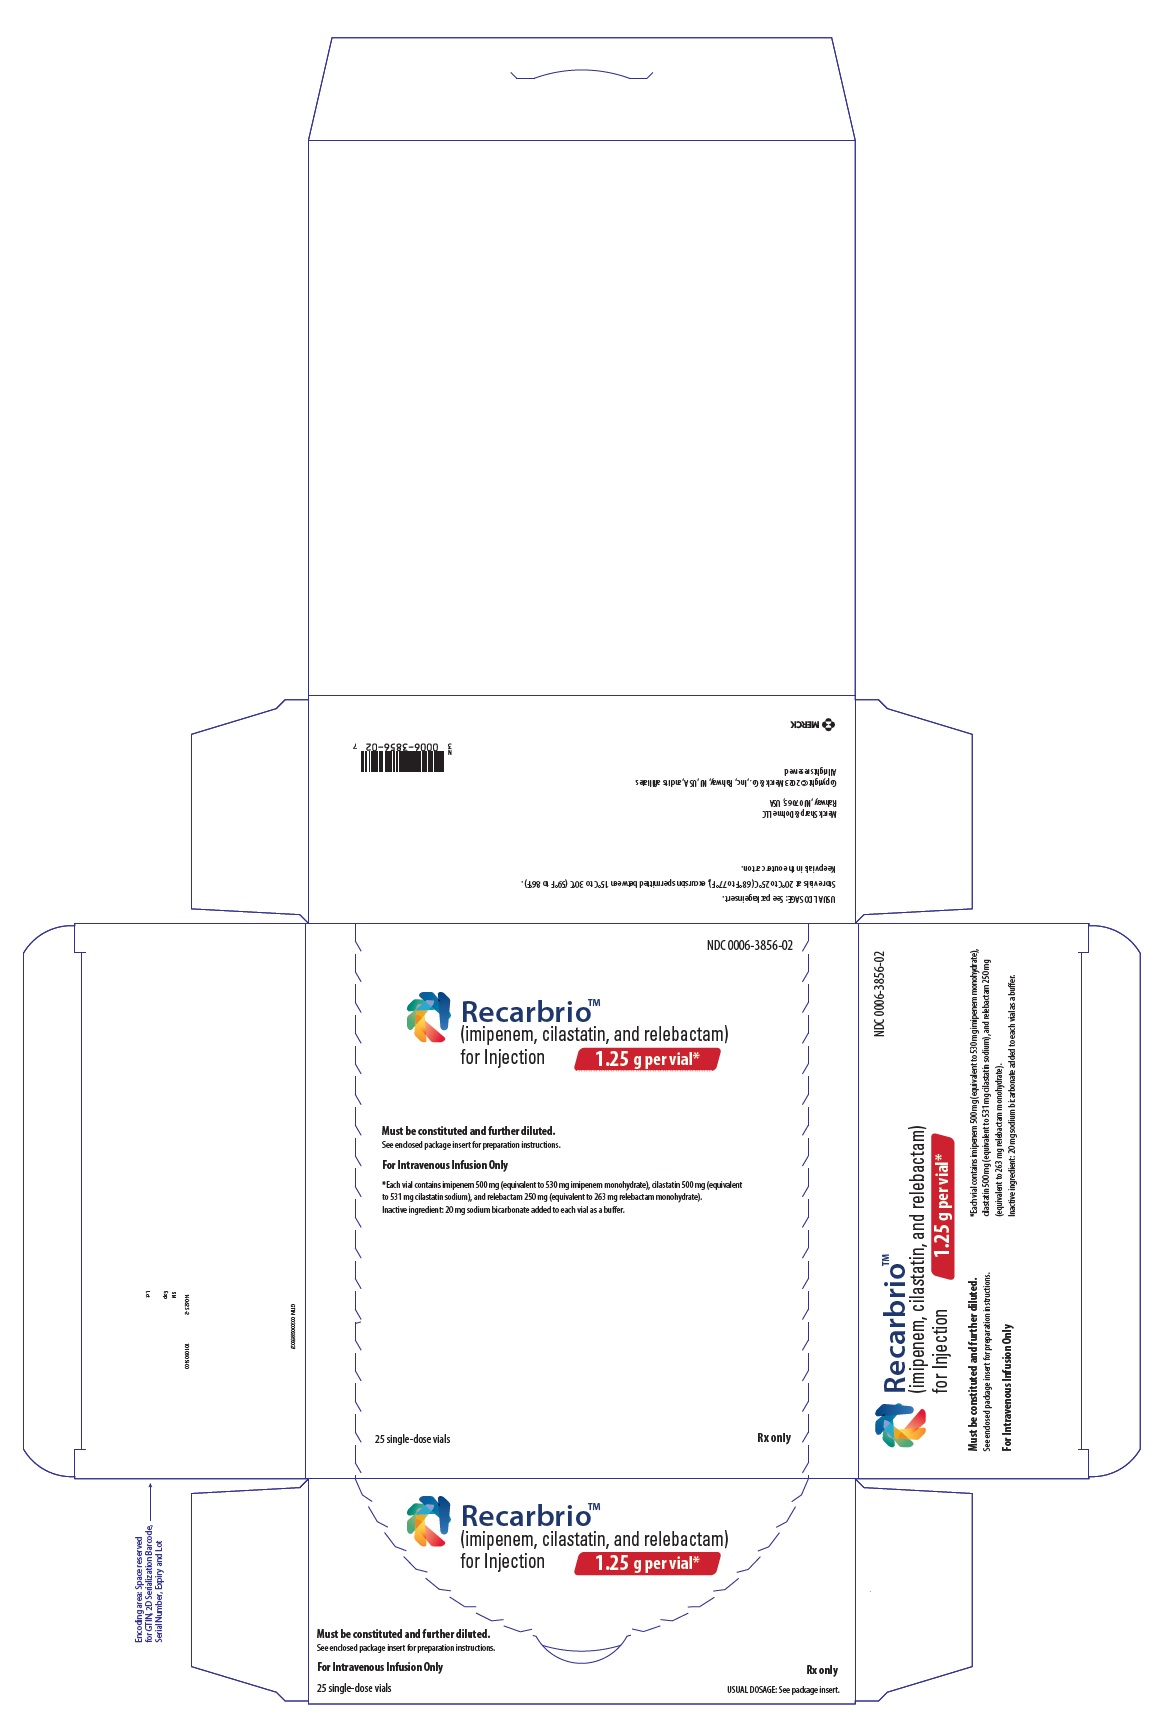 PRINCIPAL DISPLAY PANEL - 1.25 g Vial Carton Label